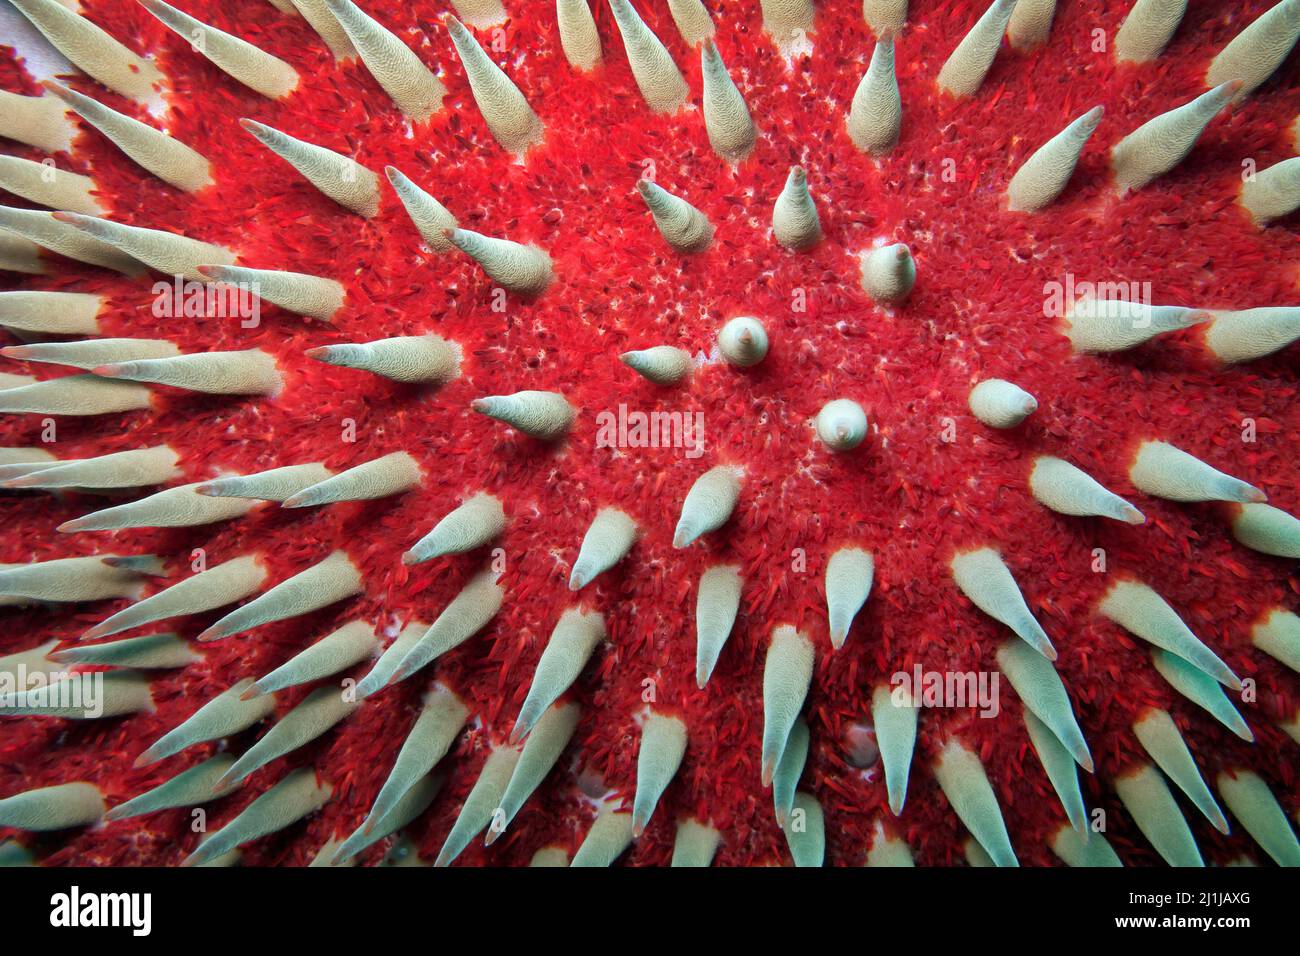 Crown of thorns starfish - Acanthaster planci Stock Photo